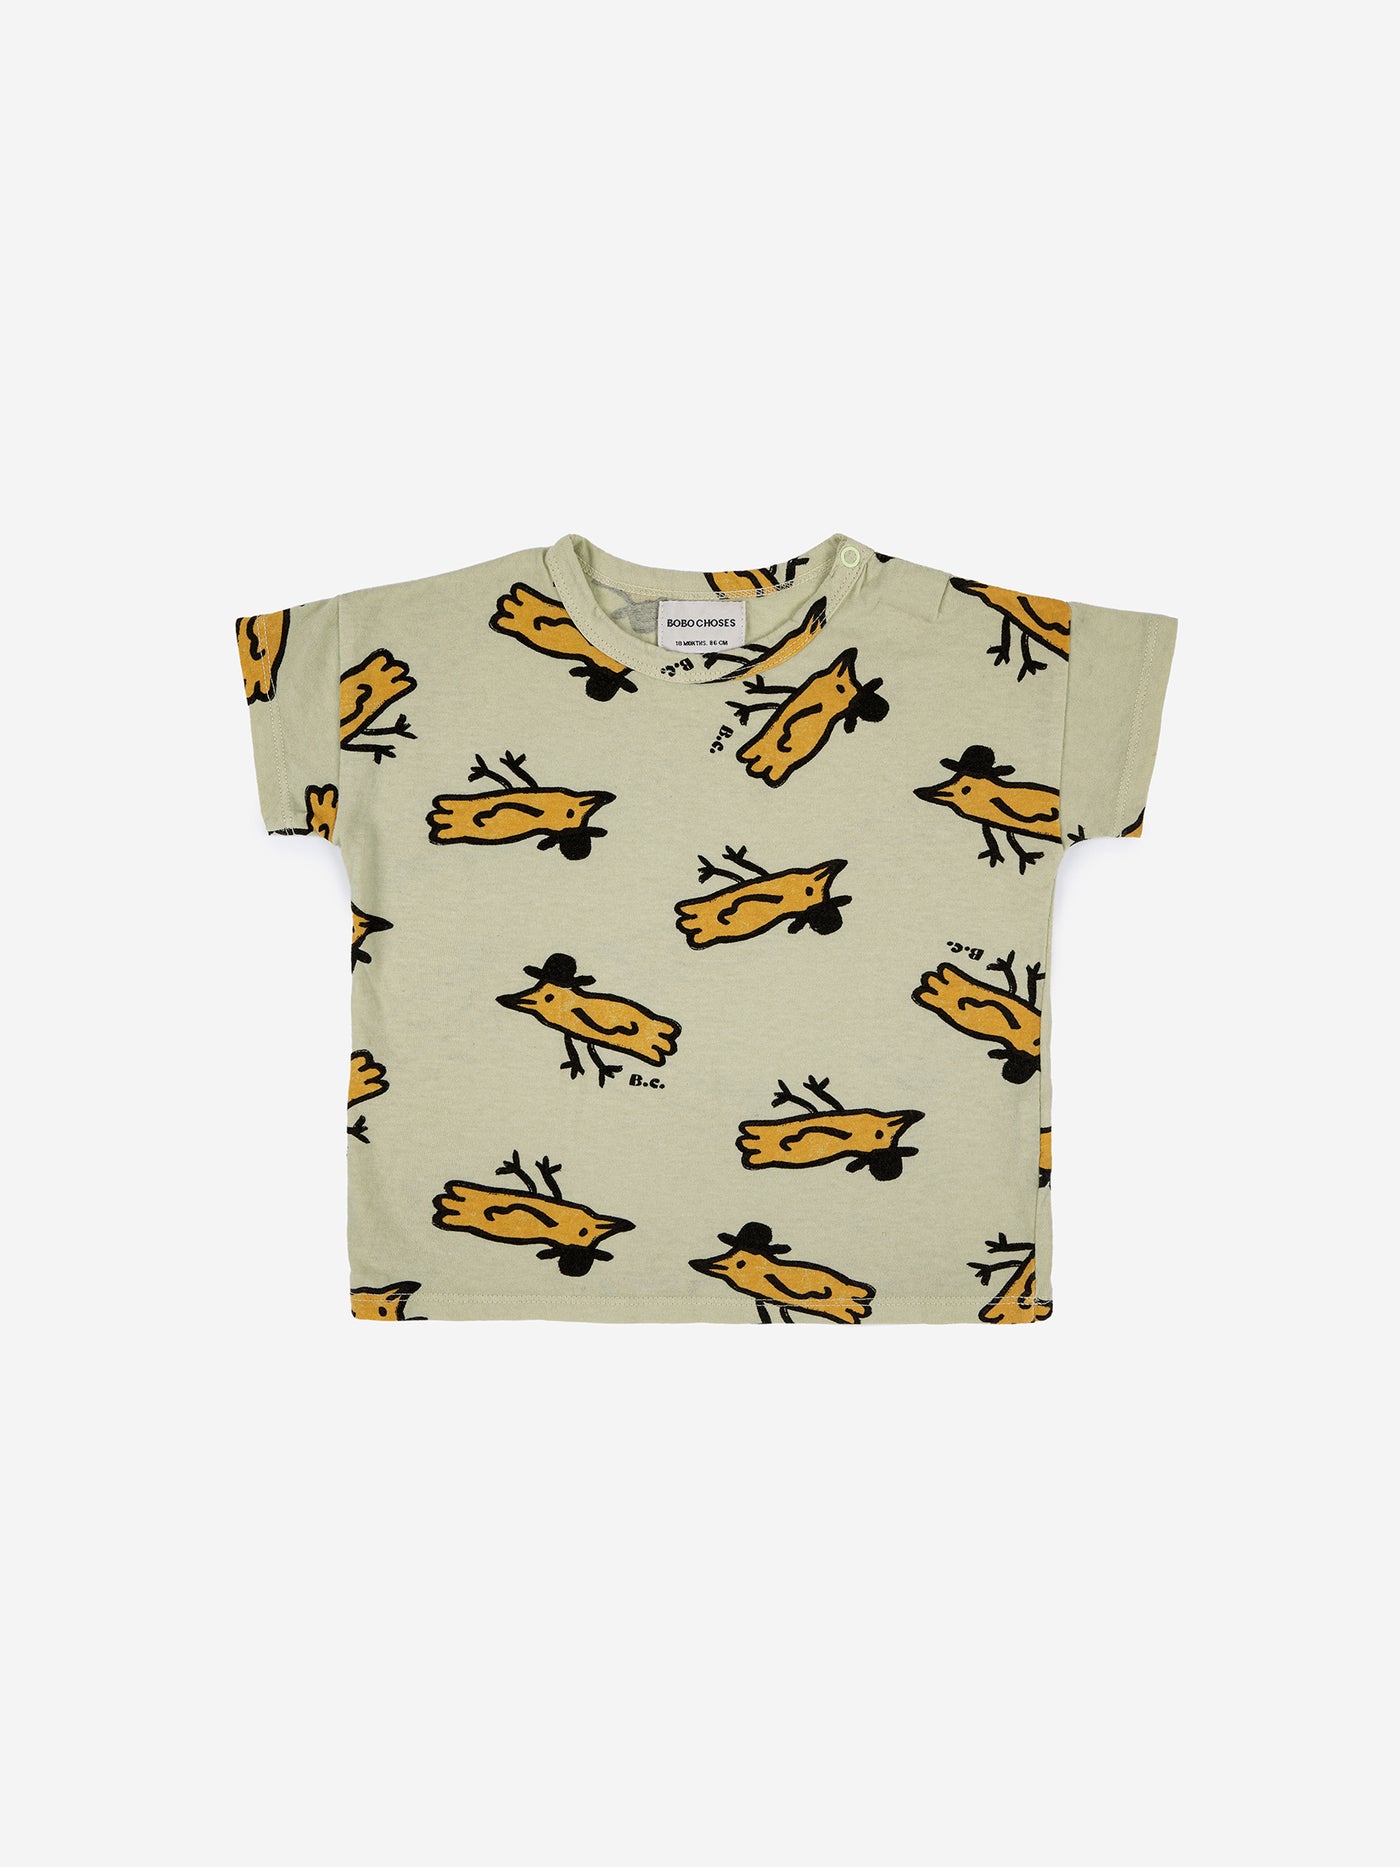 Mr Birdie T-shirt - COCO LETO